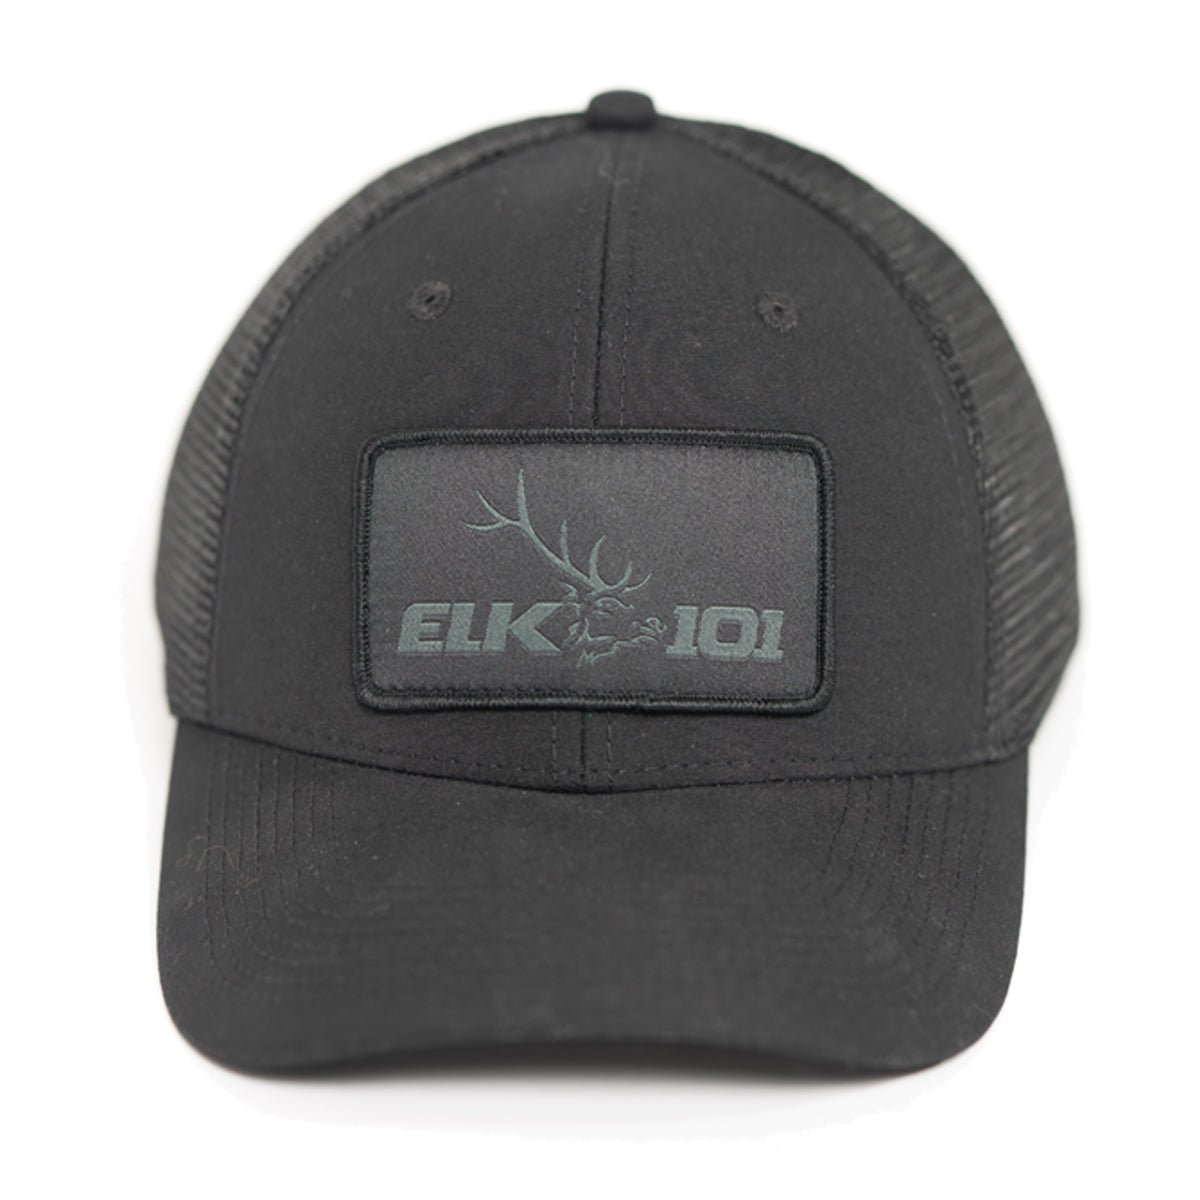 Elk101 Black Out Trucker Hat in  by GOHUNT | Elk101.com - GOHUNT Shop